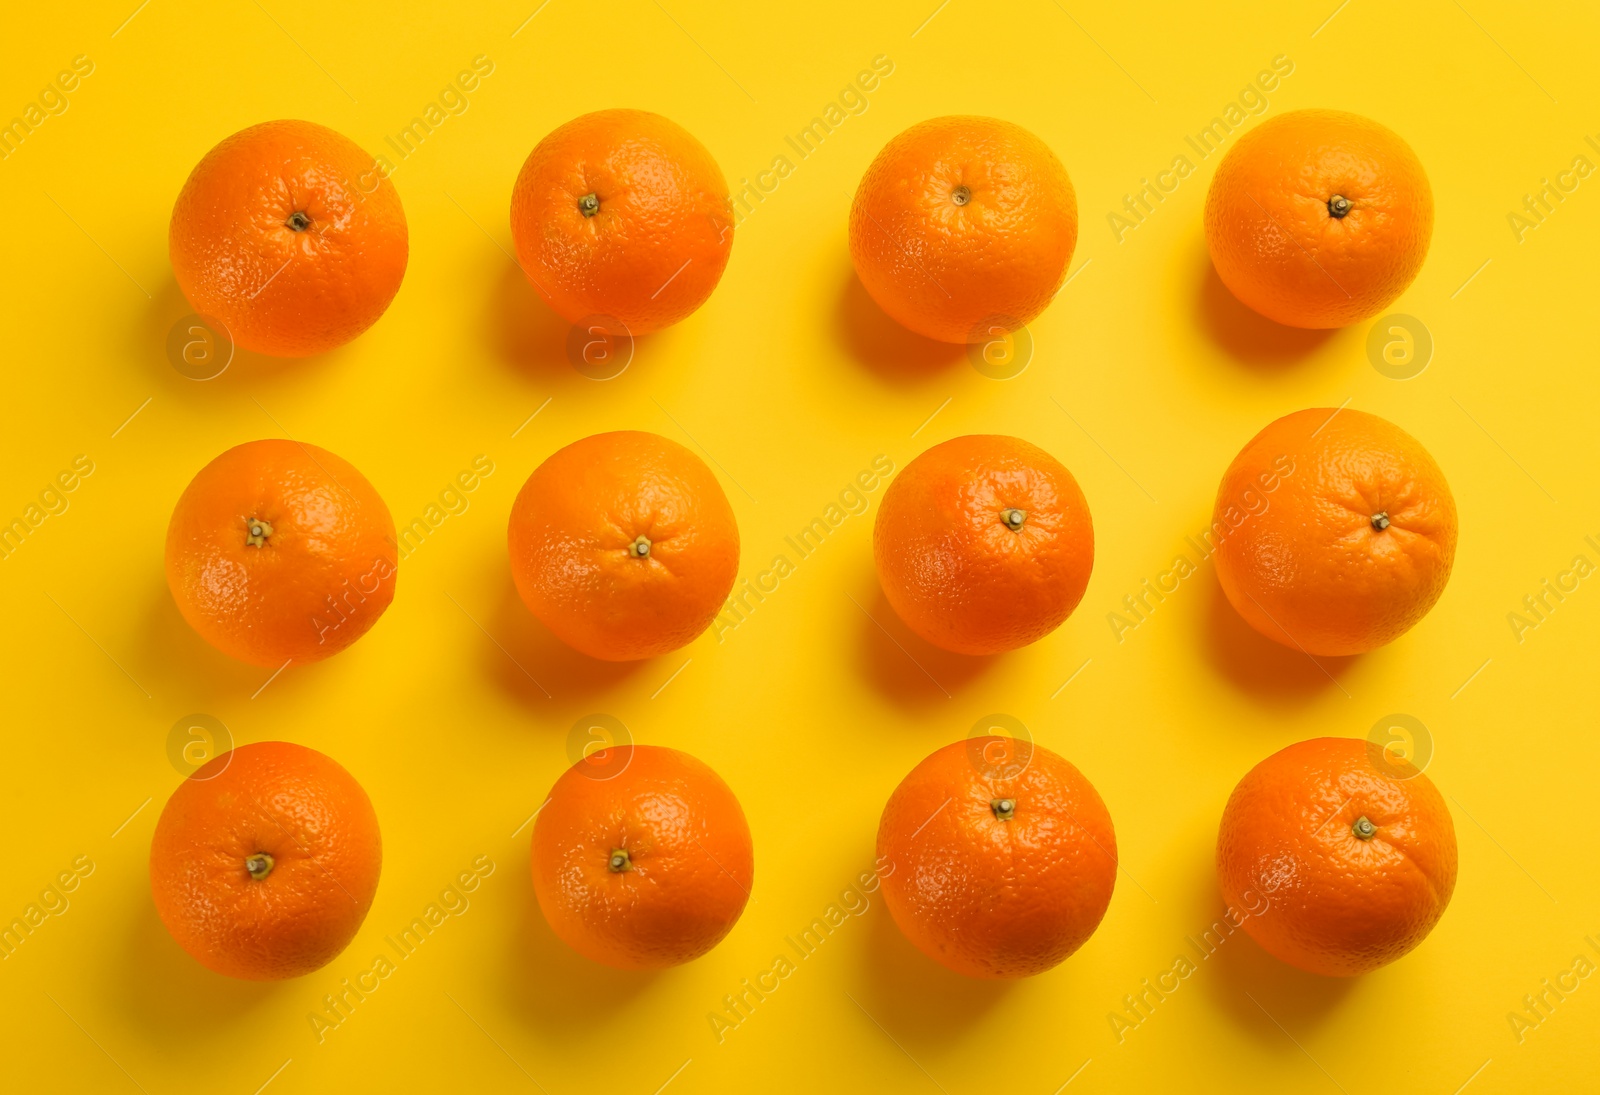 Photo of Fresh ripe oranges on yellow background, flat lay